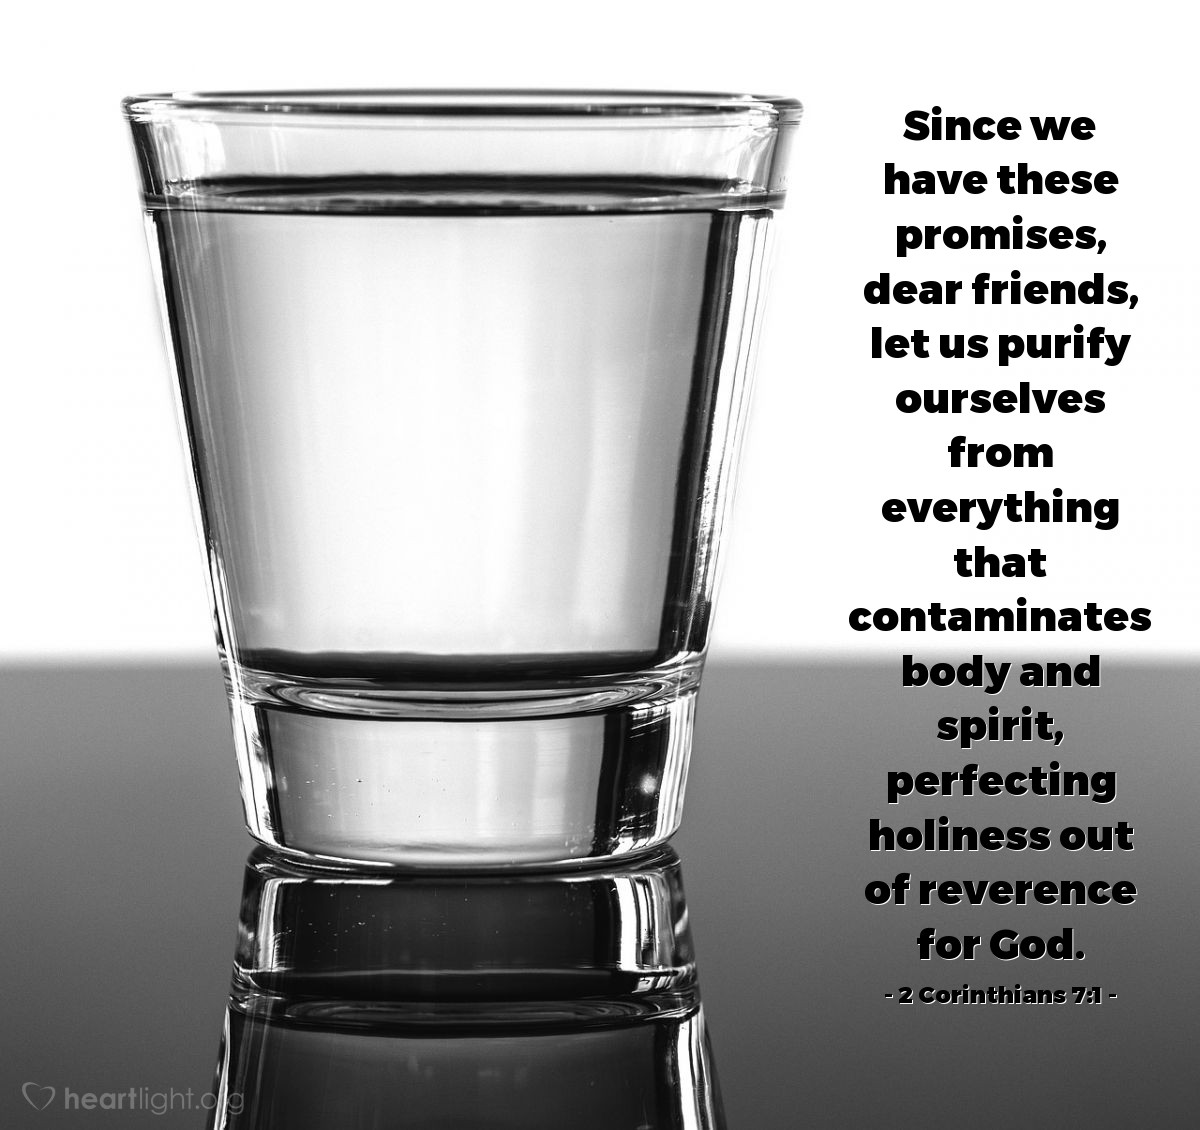 Illustration of 2 Corinthians 7:1 on Promises